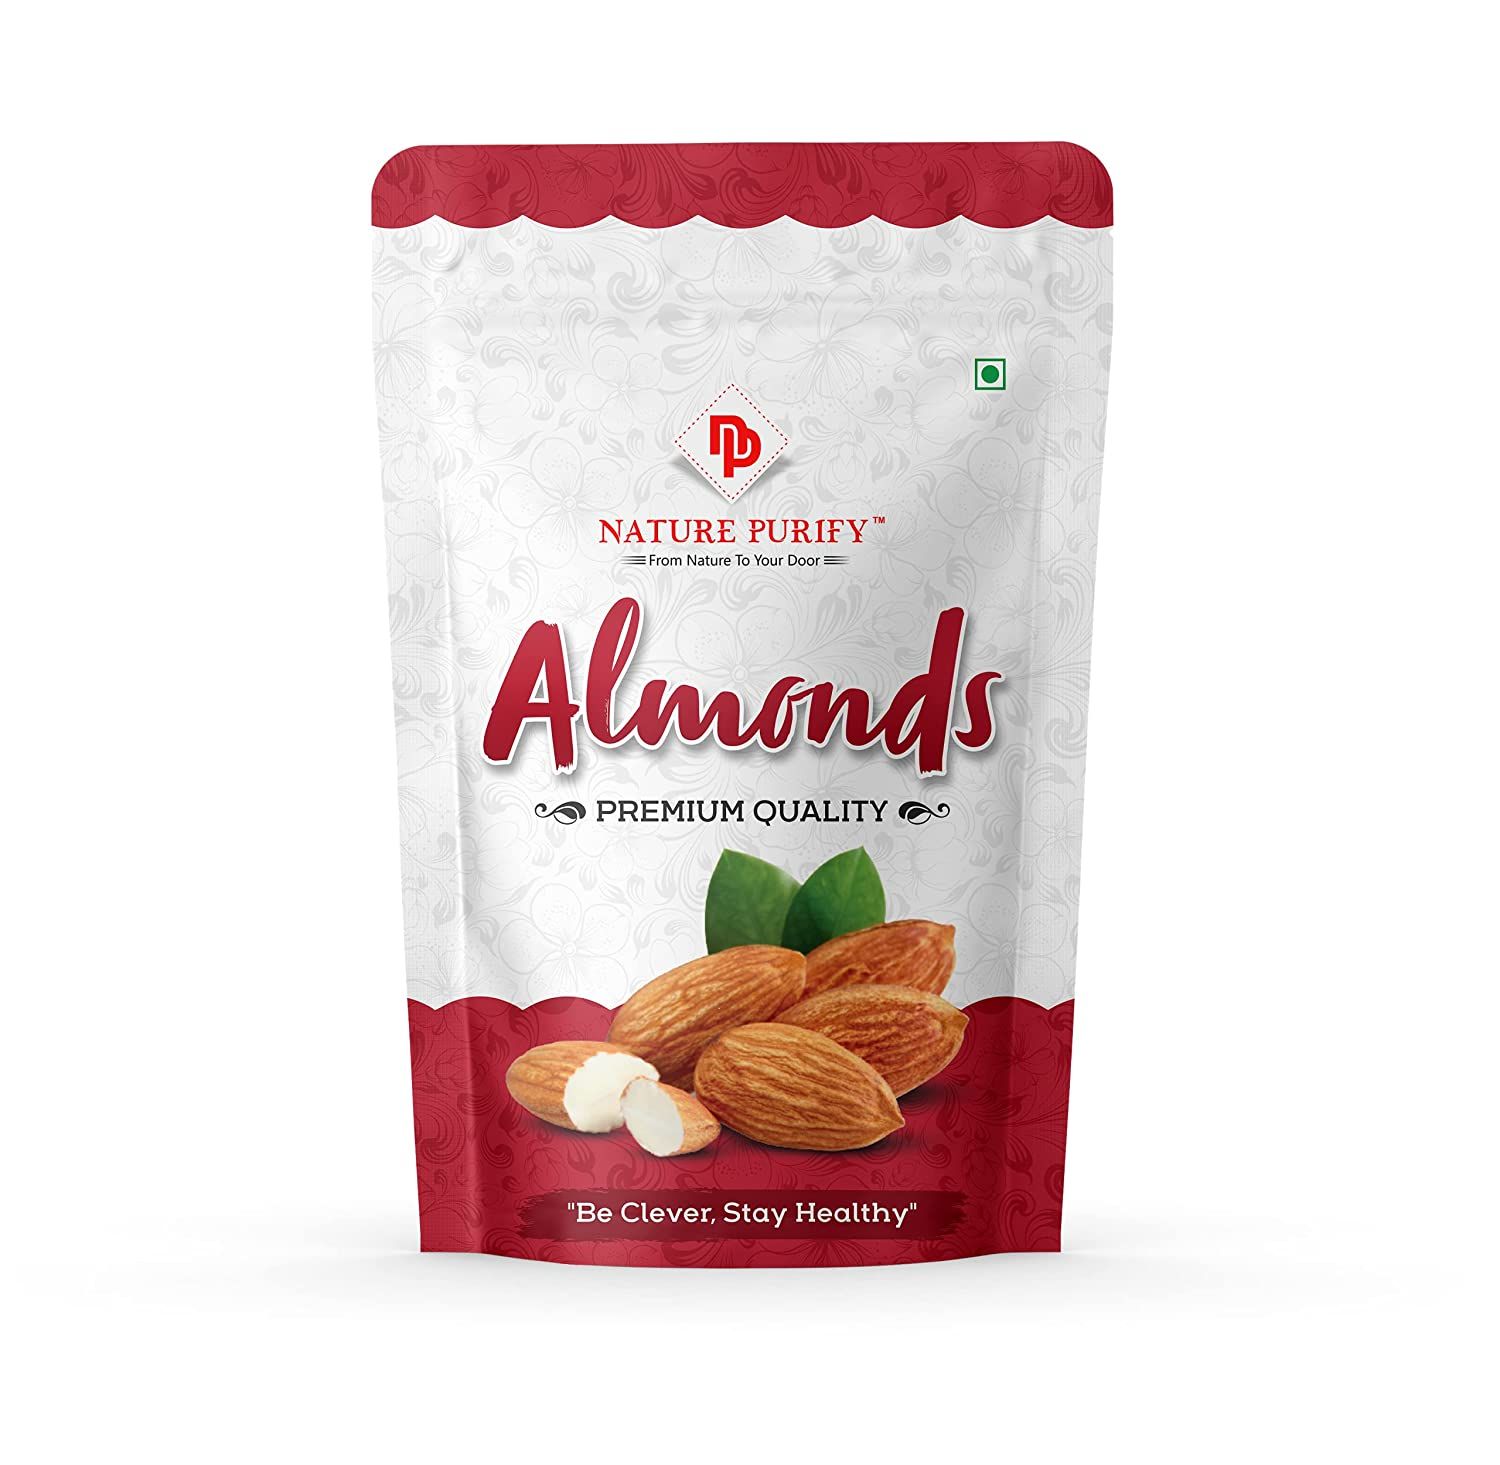 Nature Purify 100% Natural Premium California Almond Image